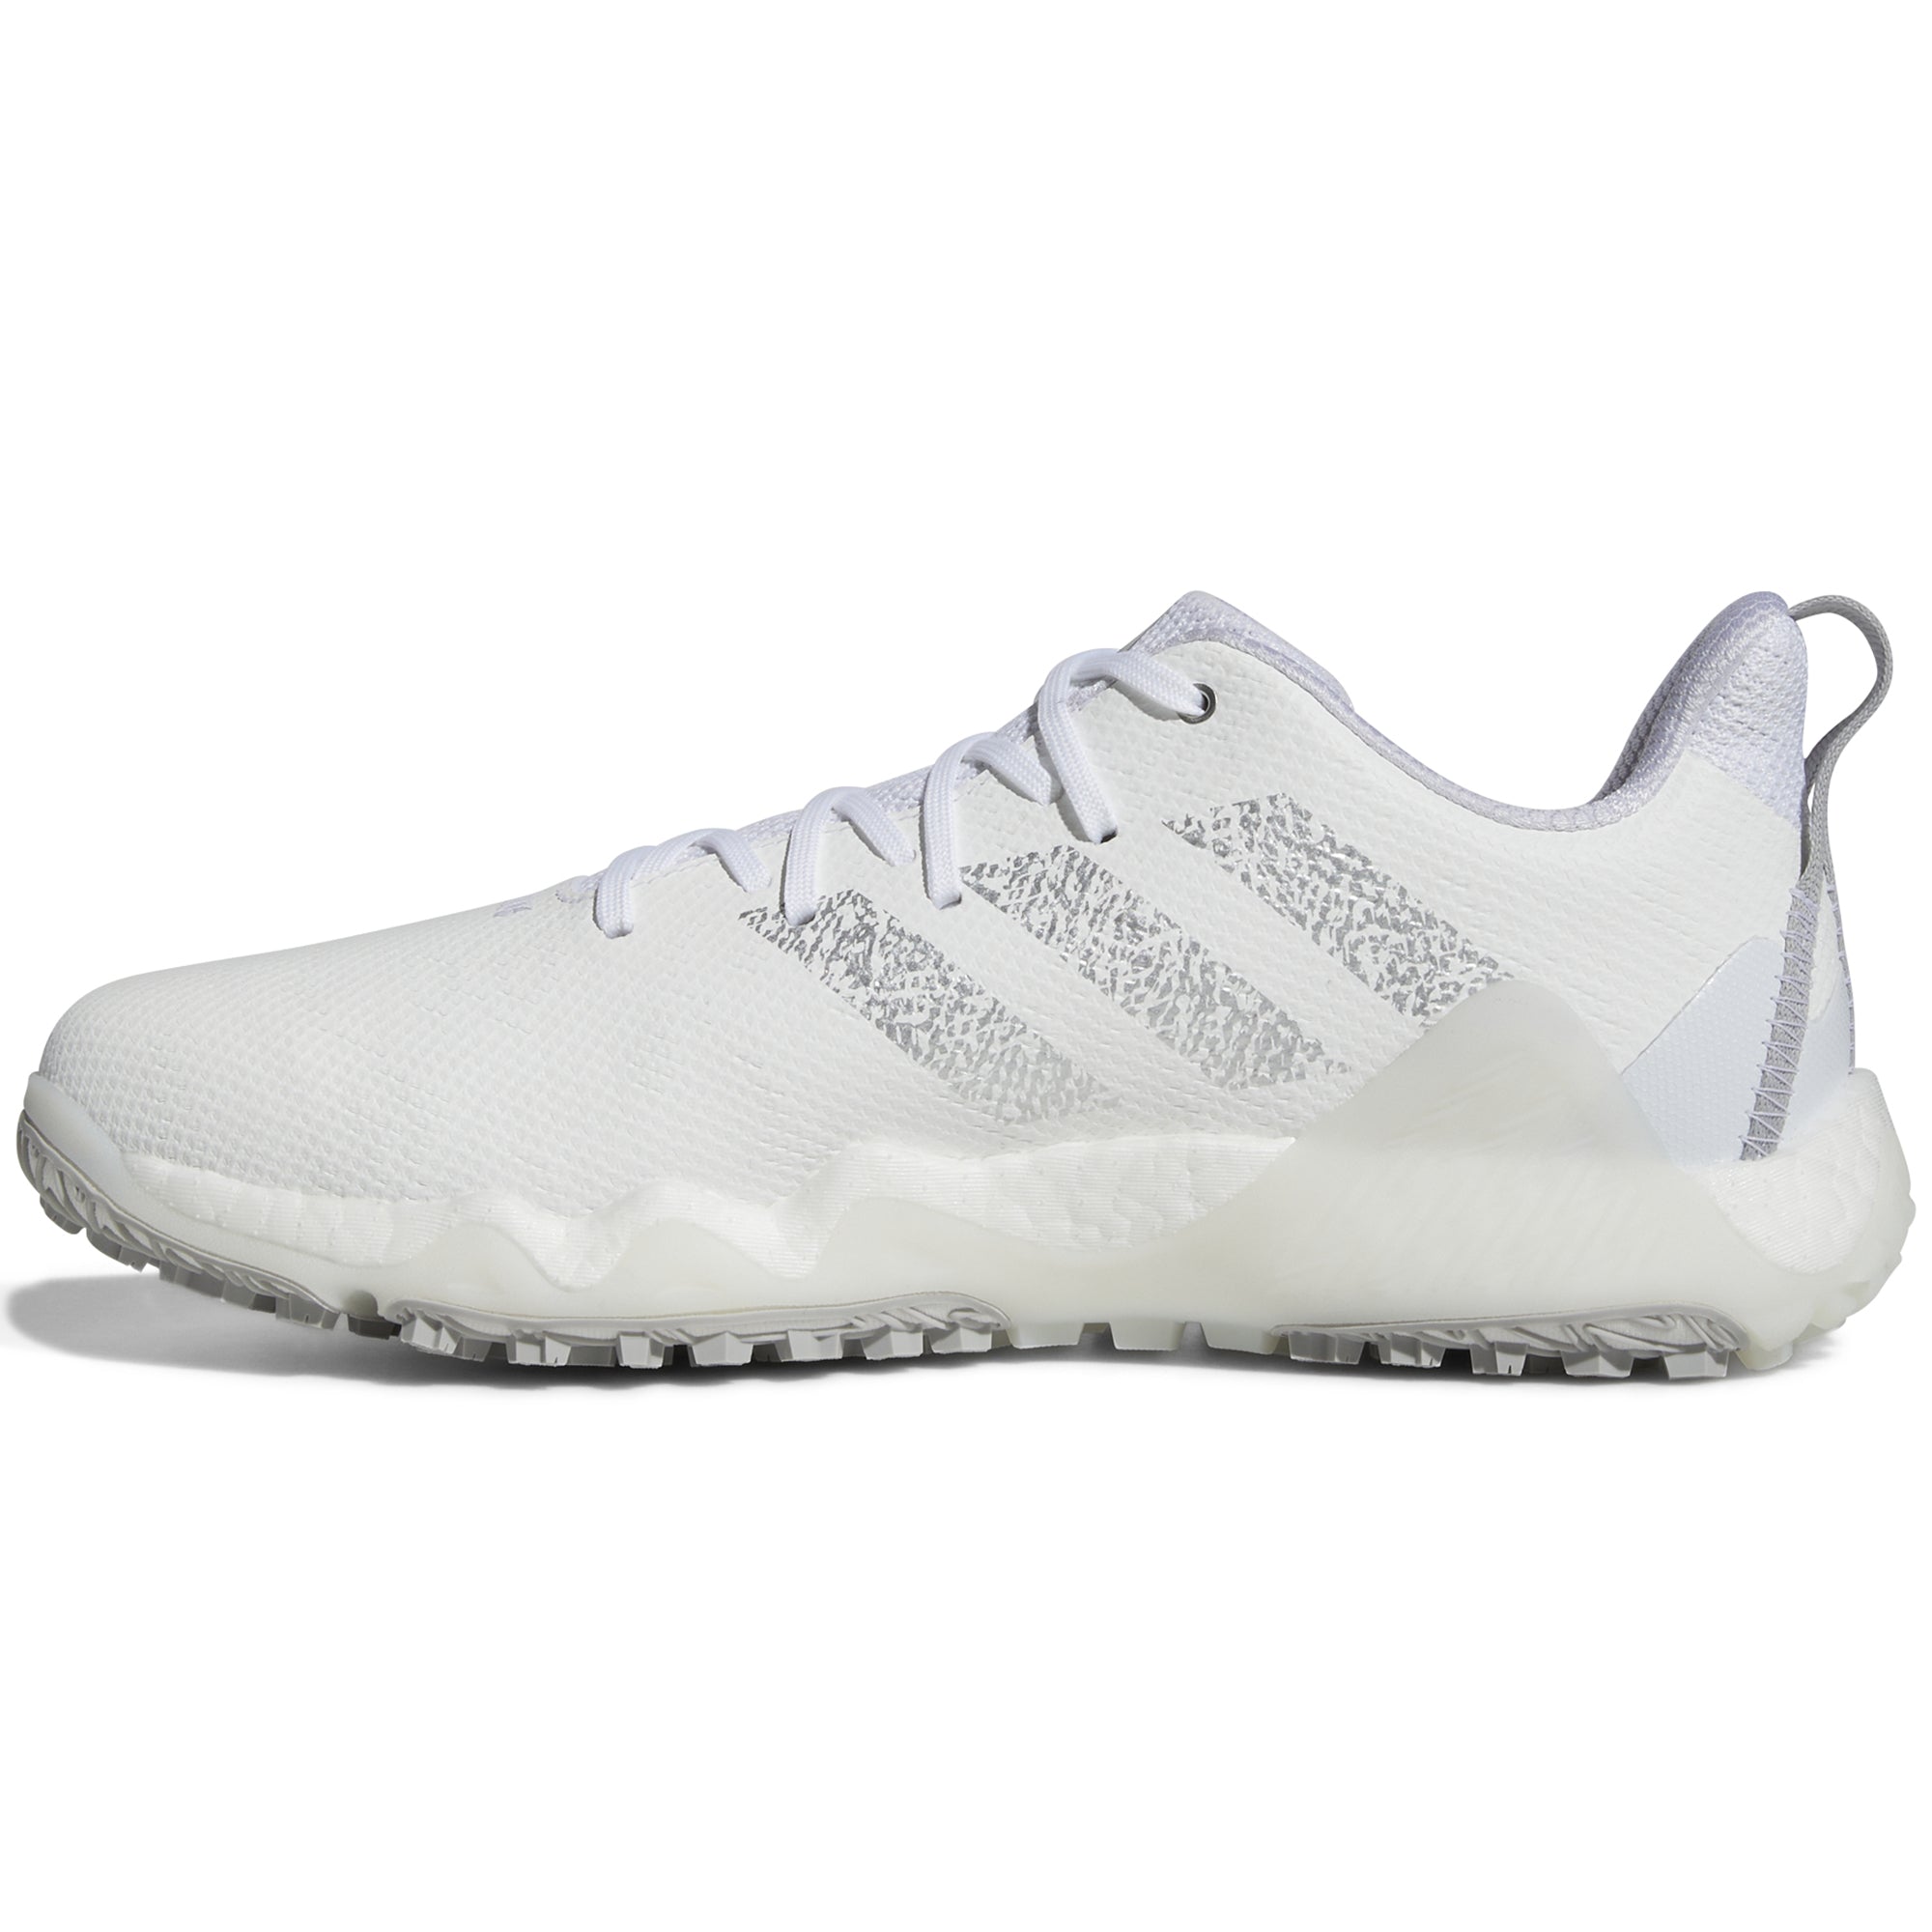 adidas-codechaos-22-lace-golf-shoes-gx3932-white-silver-metallic-grey-two